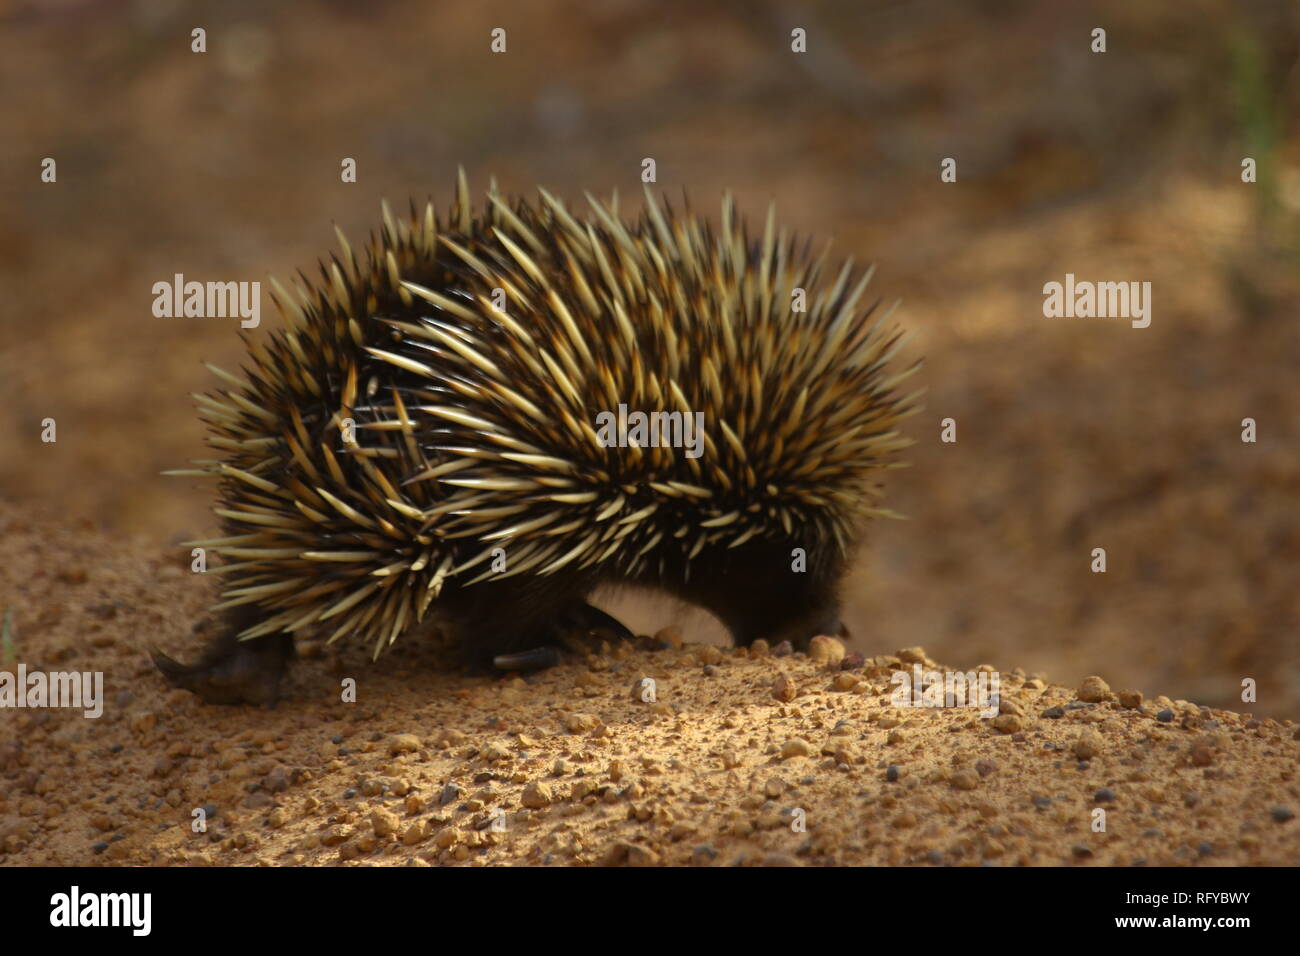 Australia Ant Hedgehog Ameisenigel Australien Stock Photo - Alamy